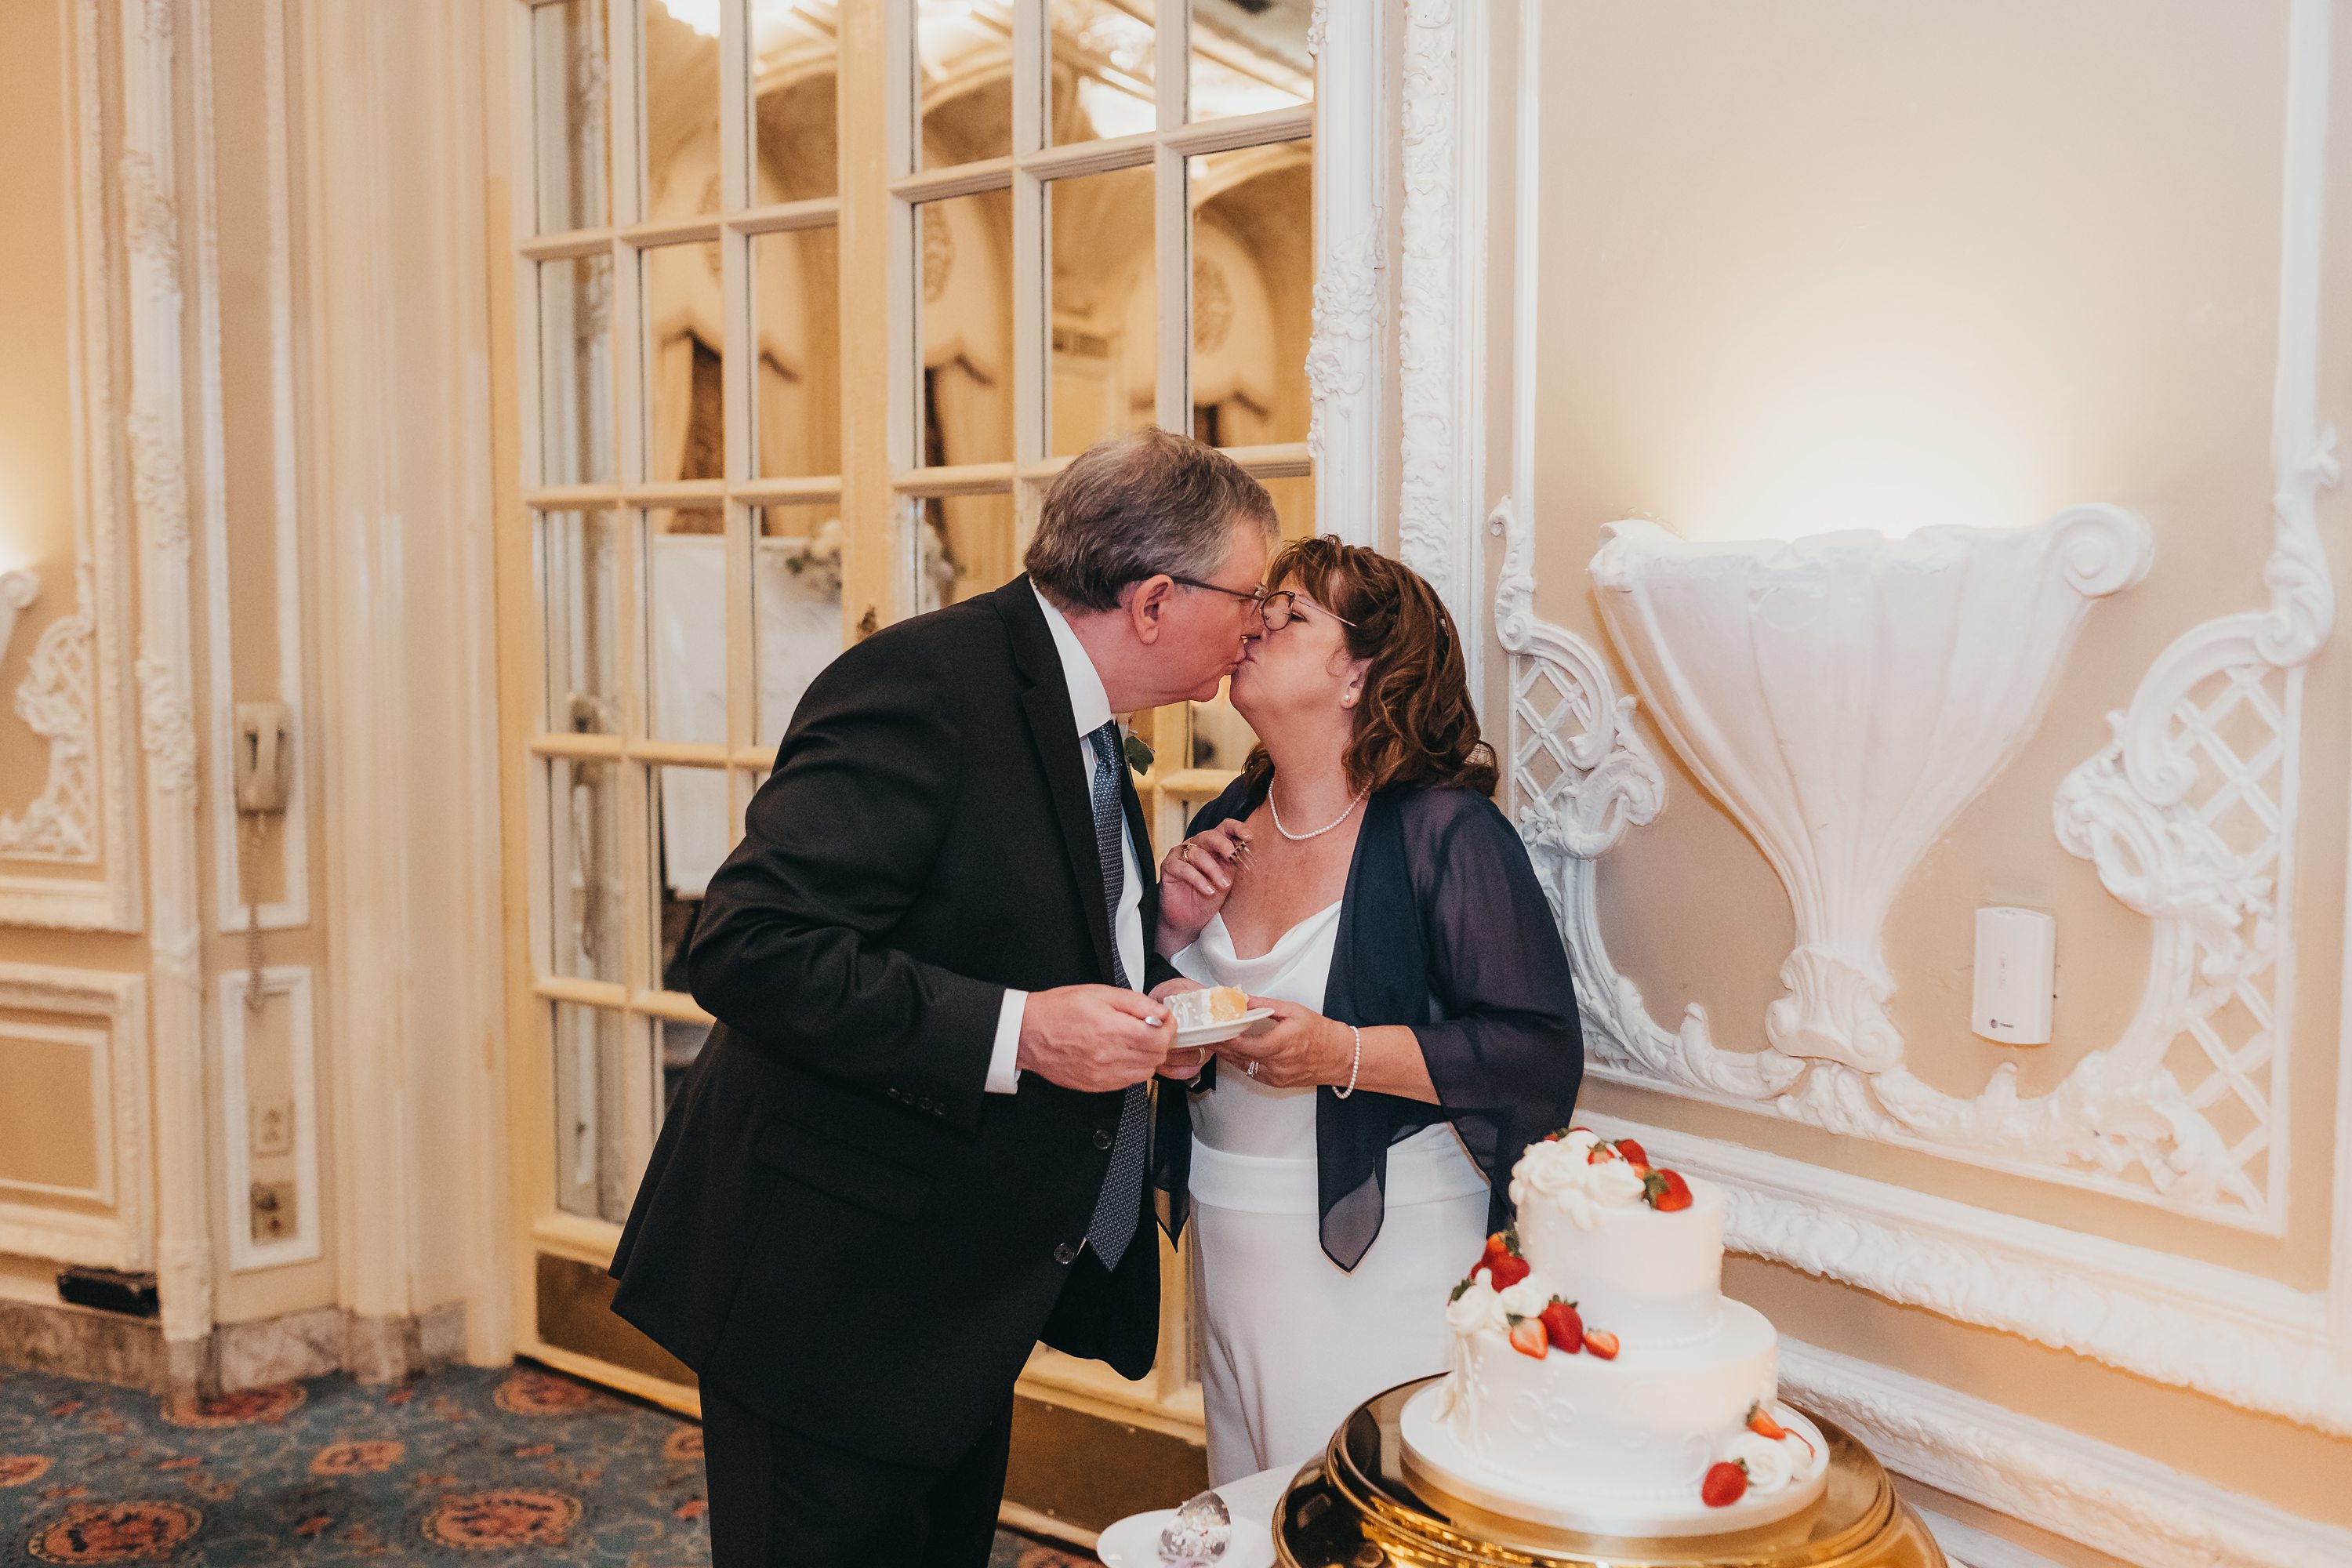 Boston Wedding Photographer,socially distanced wedding,dessert works bakery boston,white wedding cake with strawberries,couple kissing after cutting wedding cake